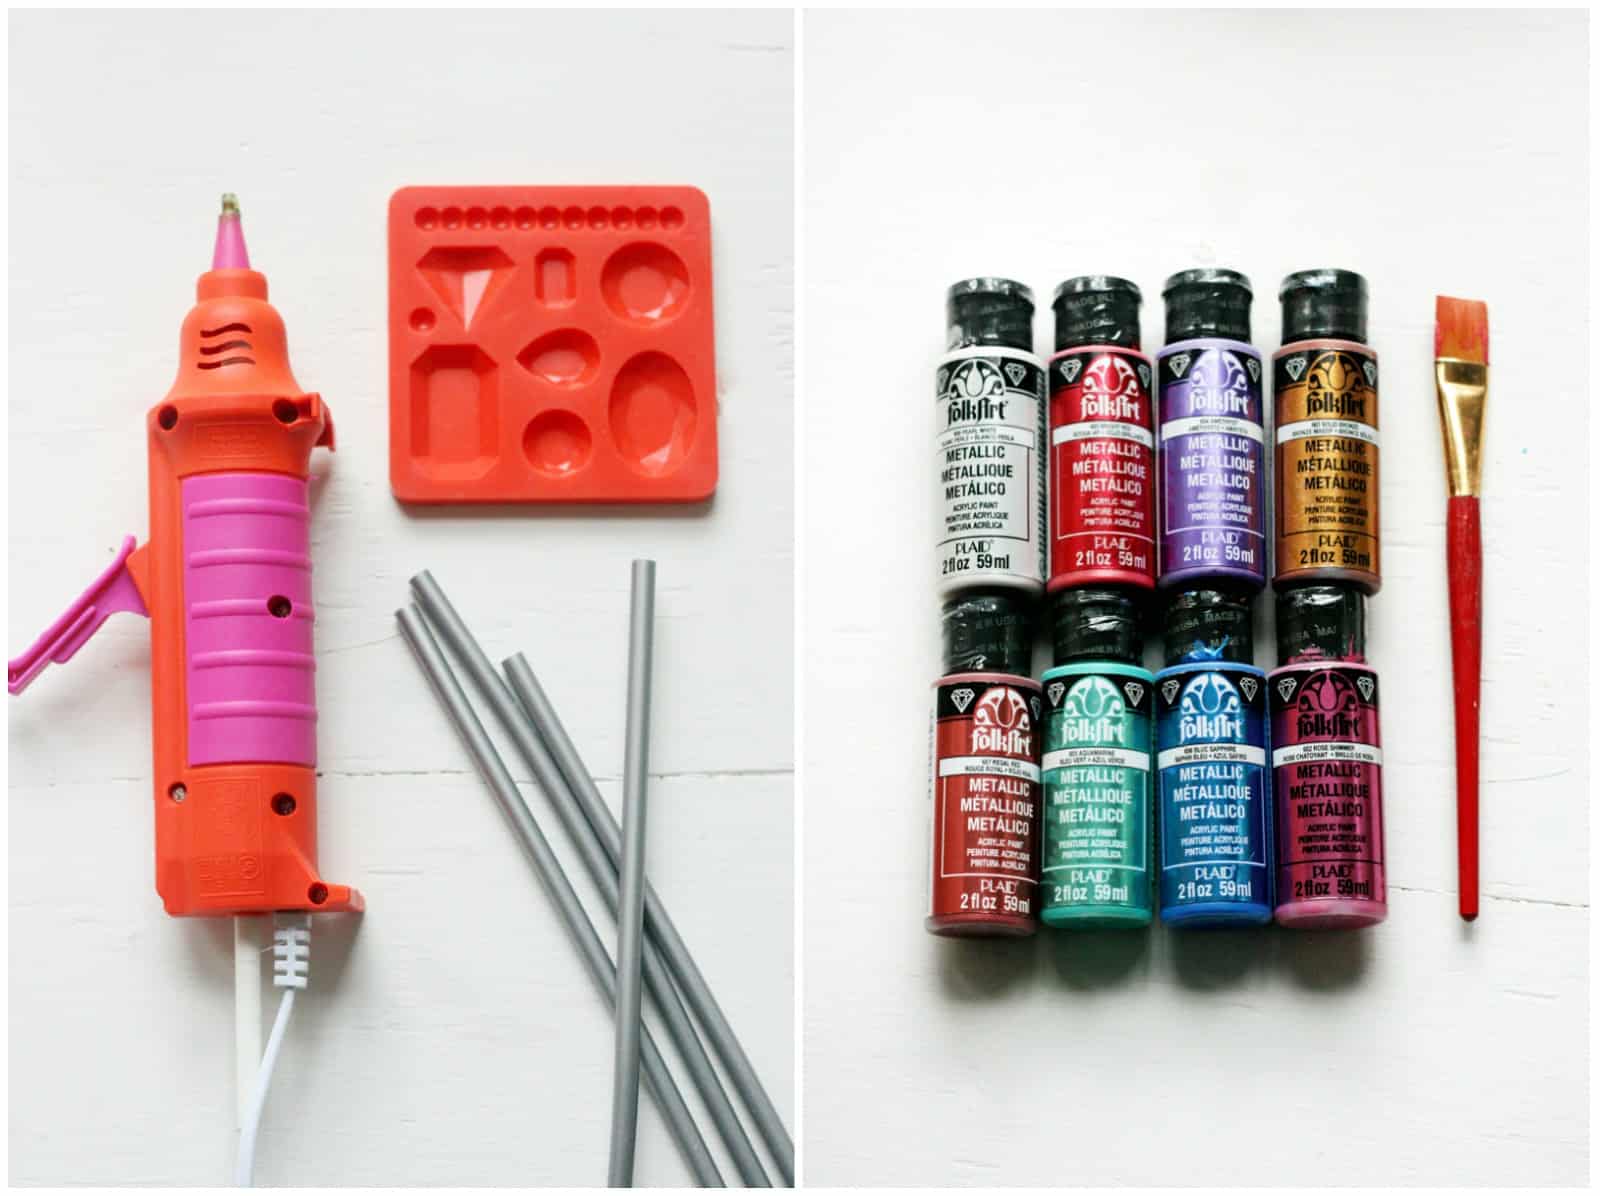 Glue gun, glue sticks, silicone mold, and acrylic paint